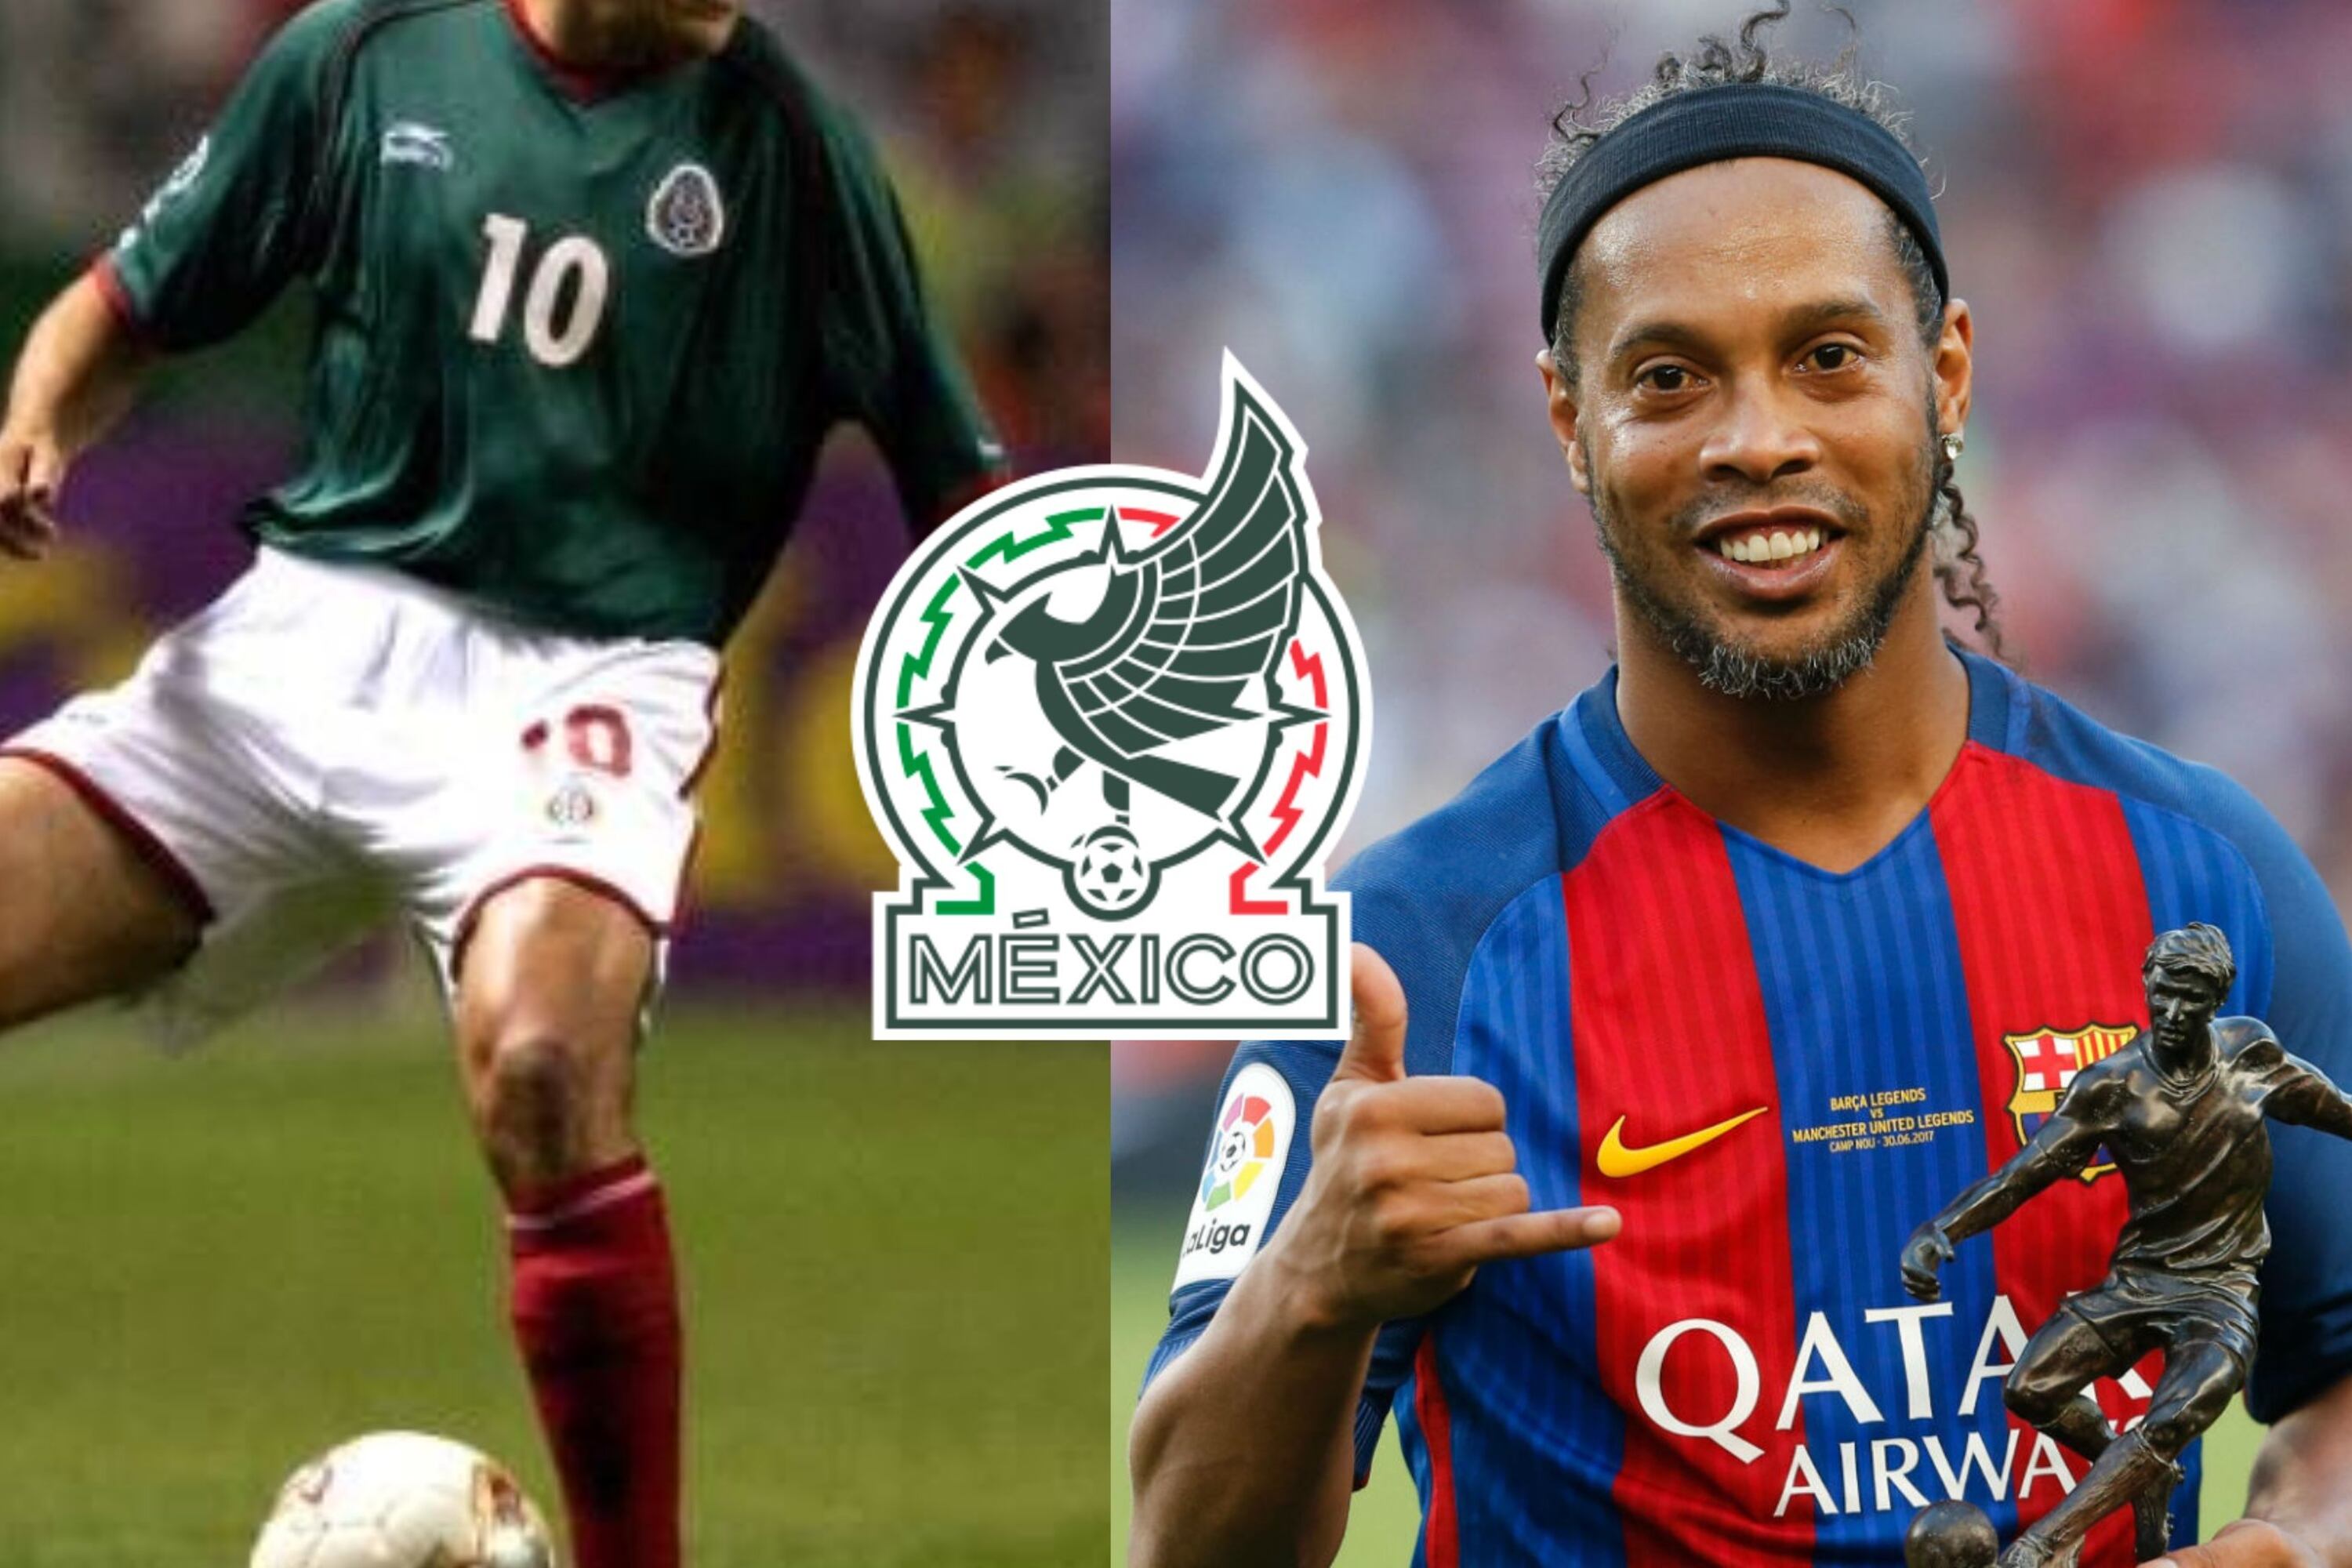 Mexico's only No. 10 worth his salt, according to Ronaldinho